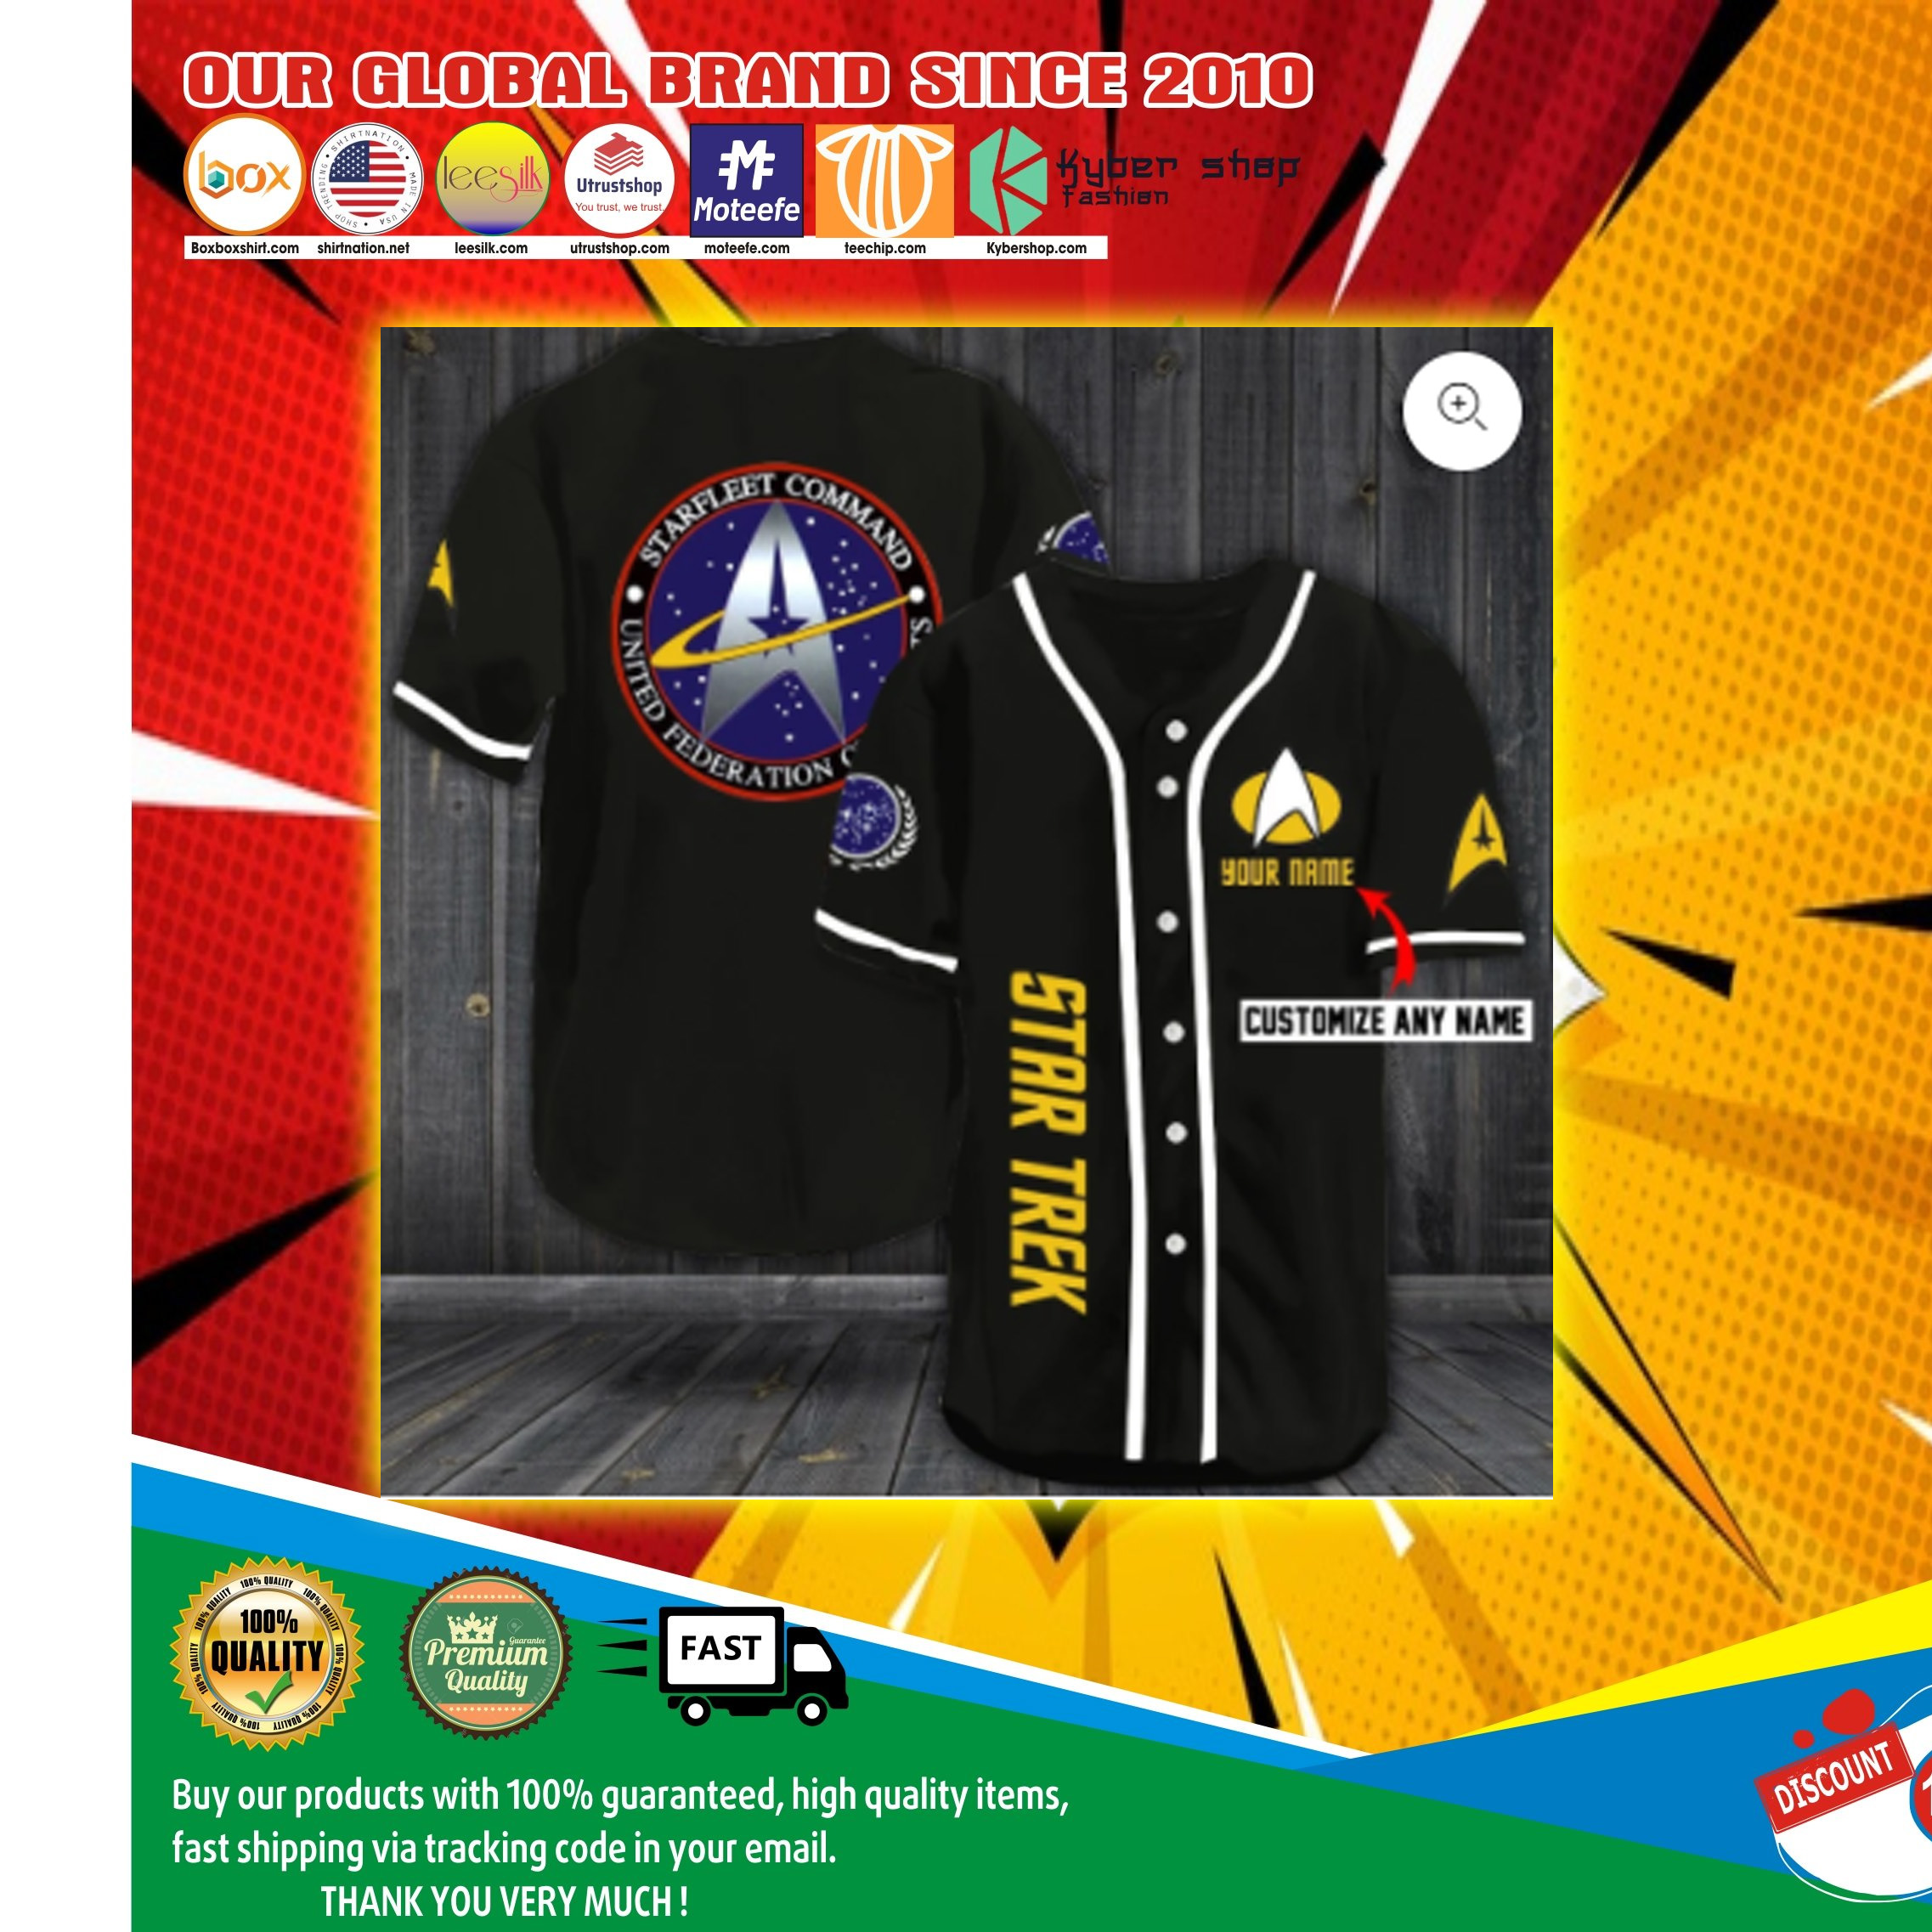 United federation starfleet Star Trek custom name baseball jersey – LIMITED EDITION